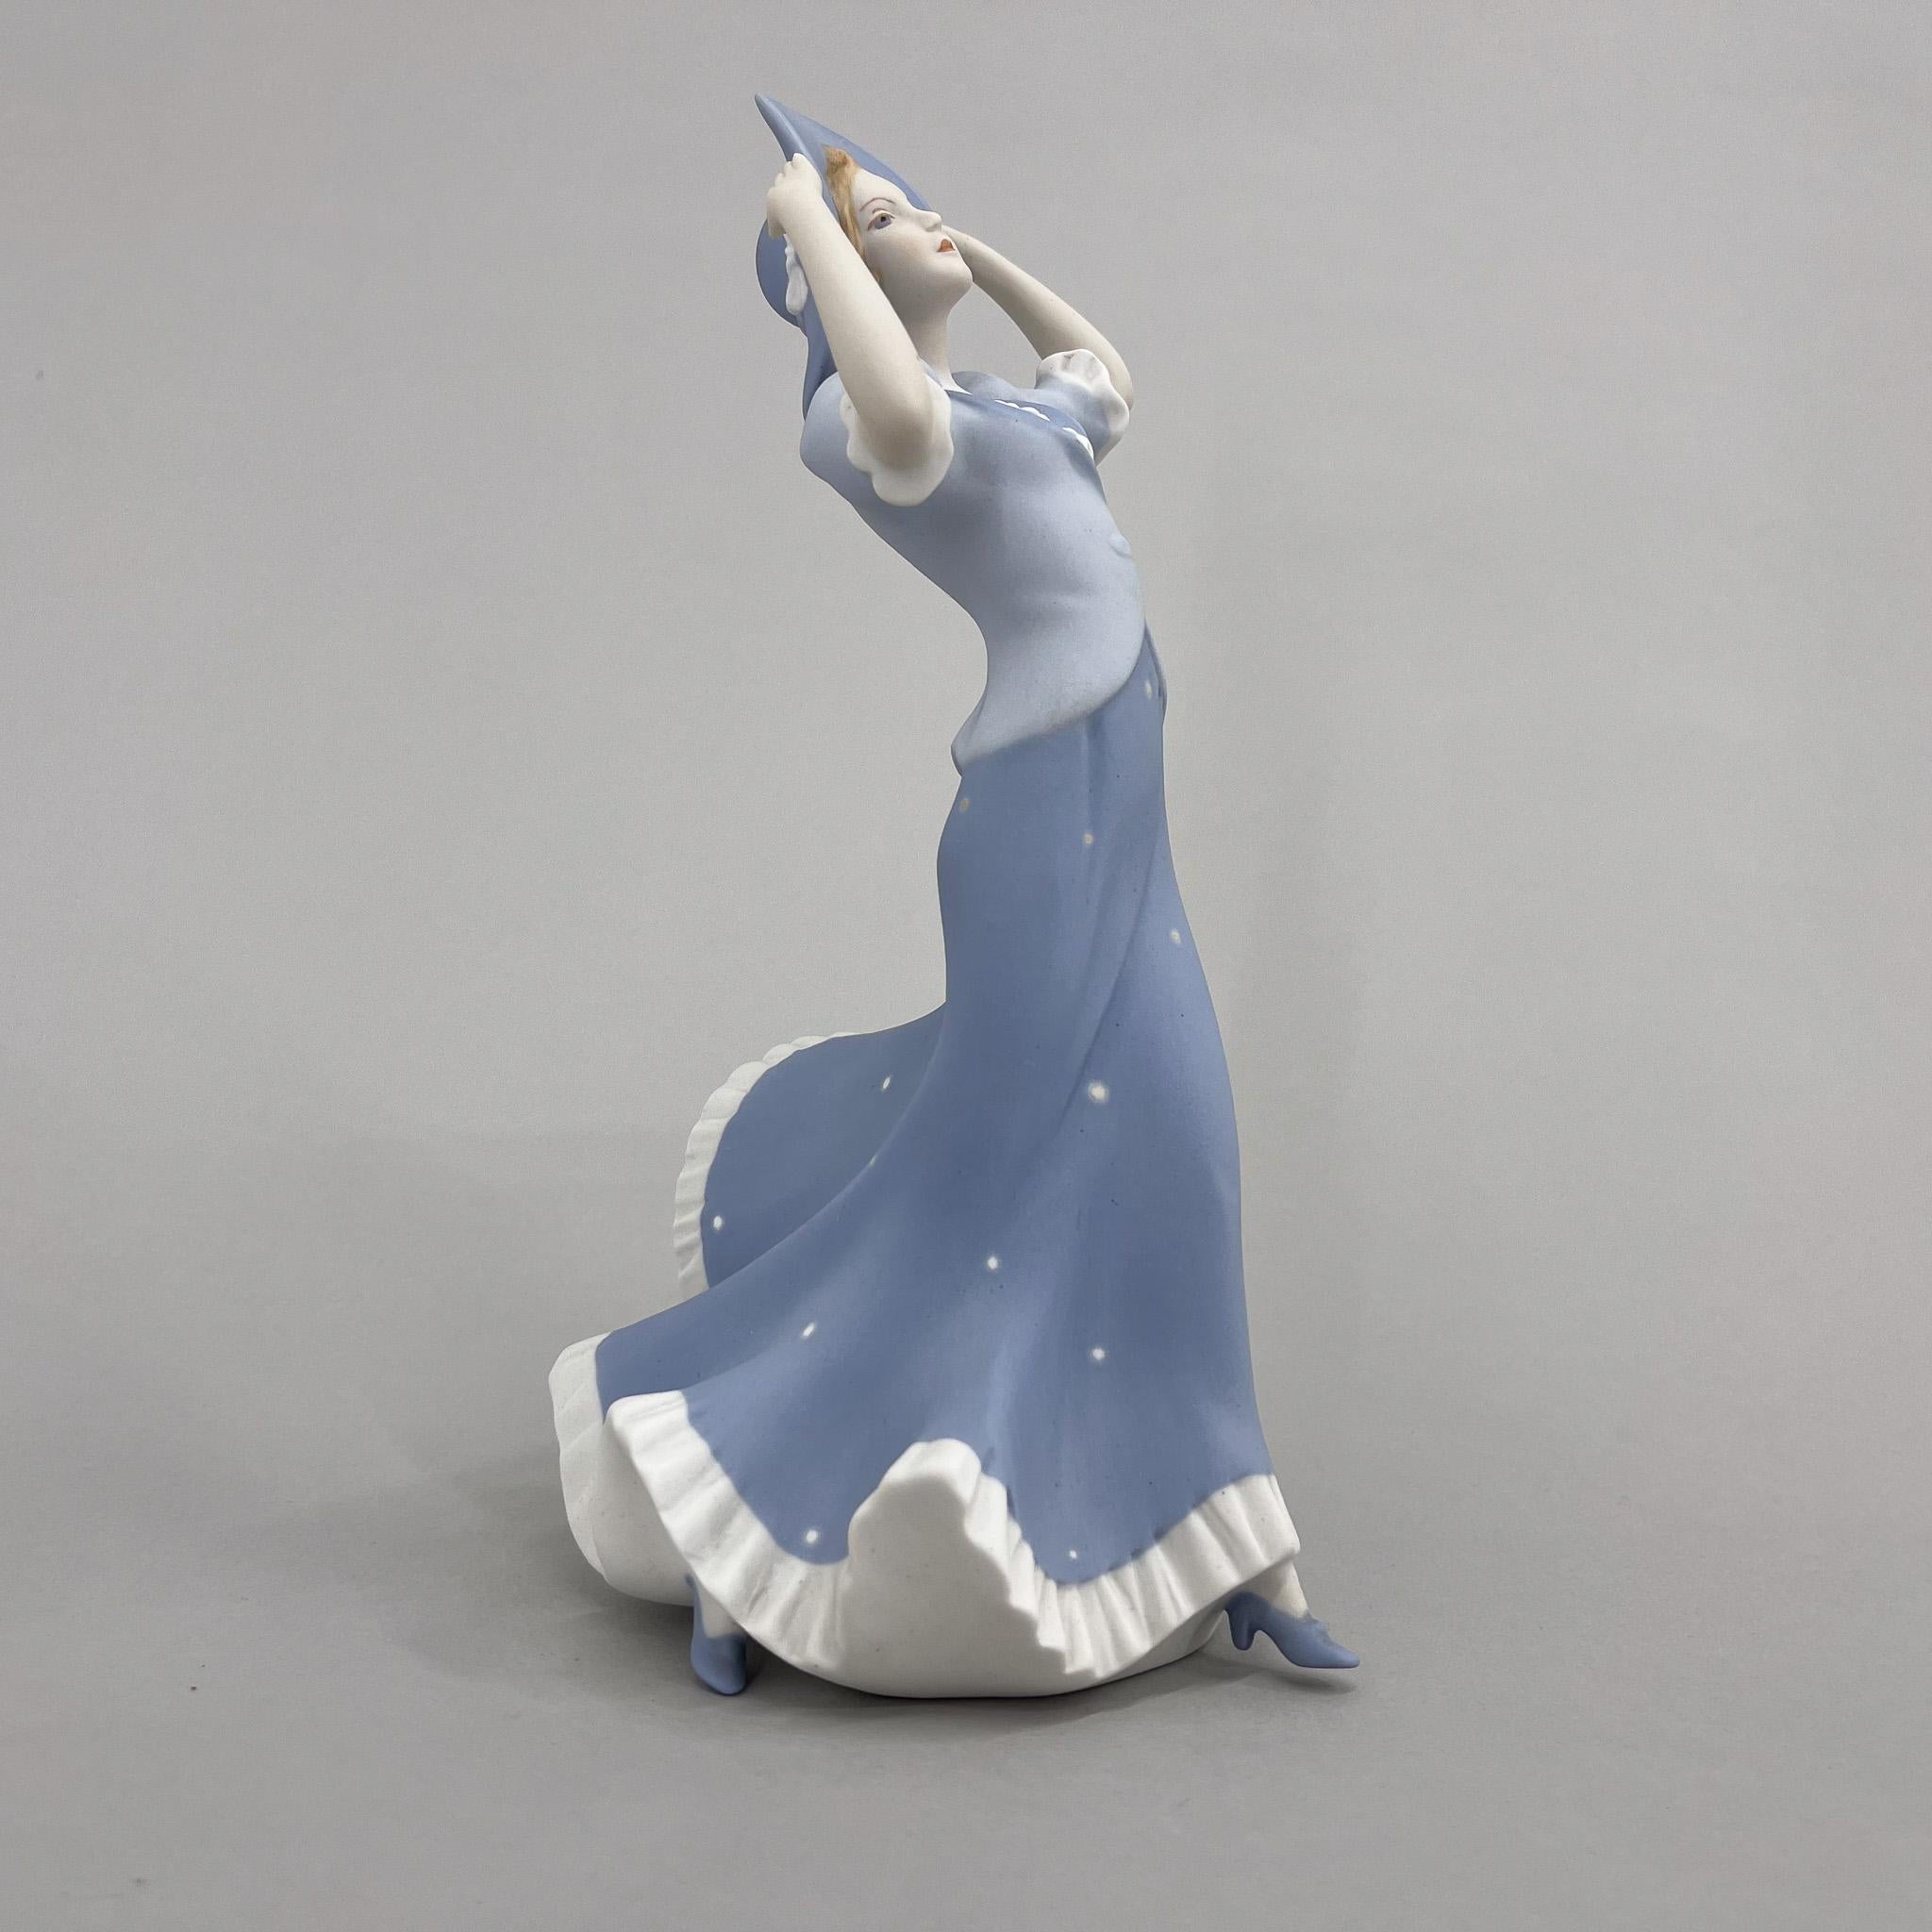 Czech 1970s Porcelain Sculpture 'Lady with Hat' by Royal Dux For Sale